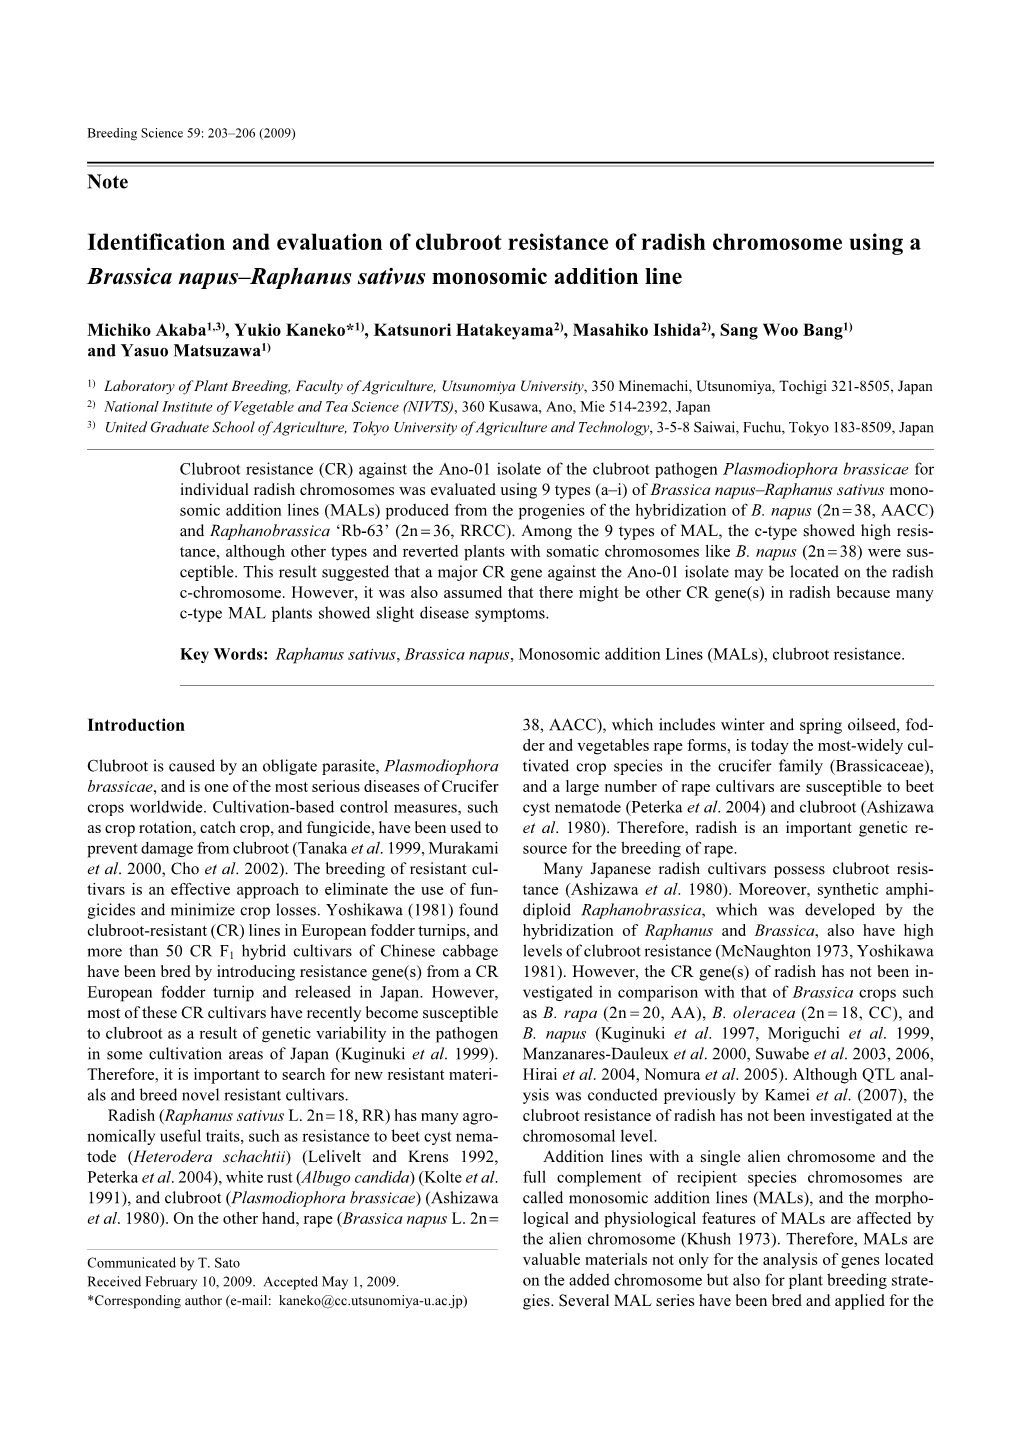 Identification and Evaluation of Clubroot Resistance of Radish Chromosome Using a Brassica Napus–Raphanus Sativus Monosomic Addition Line